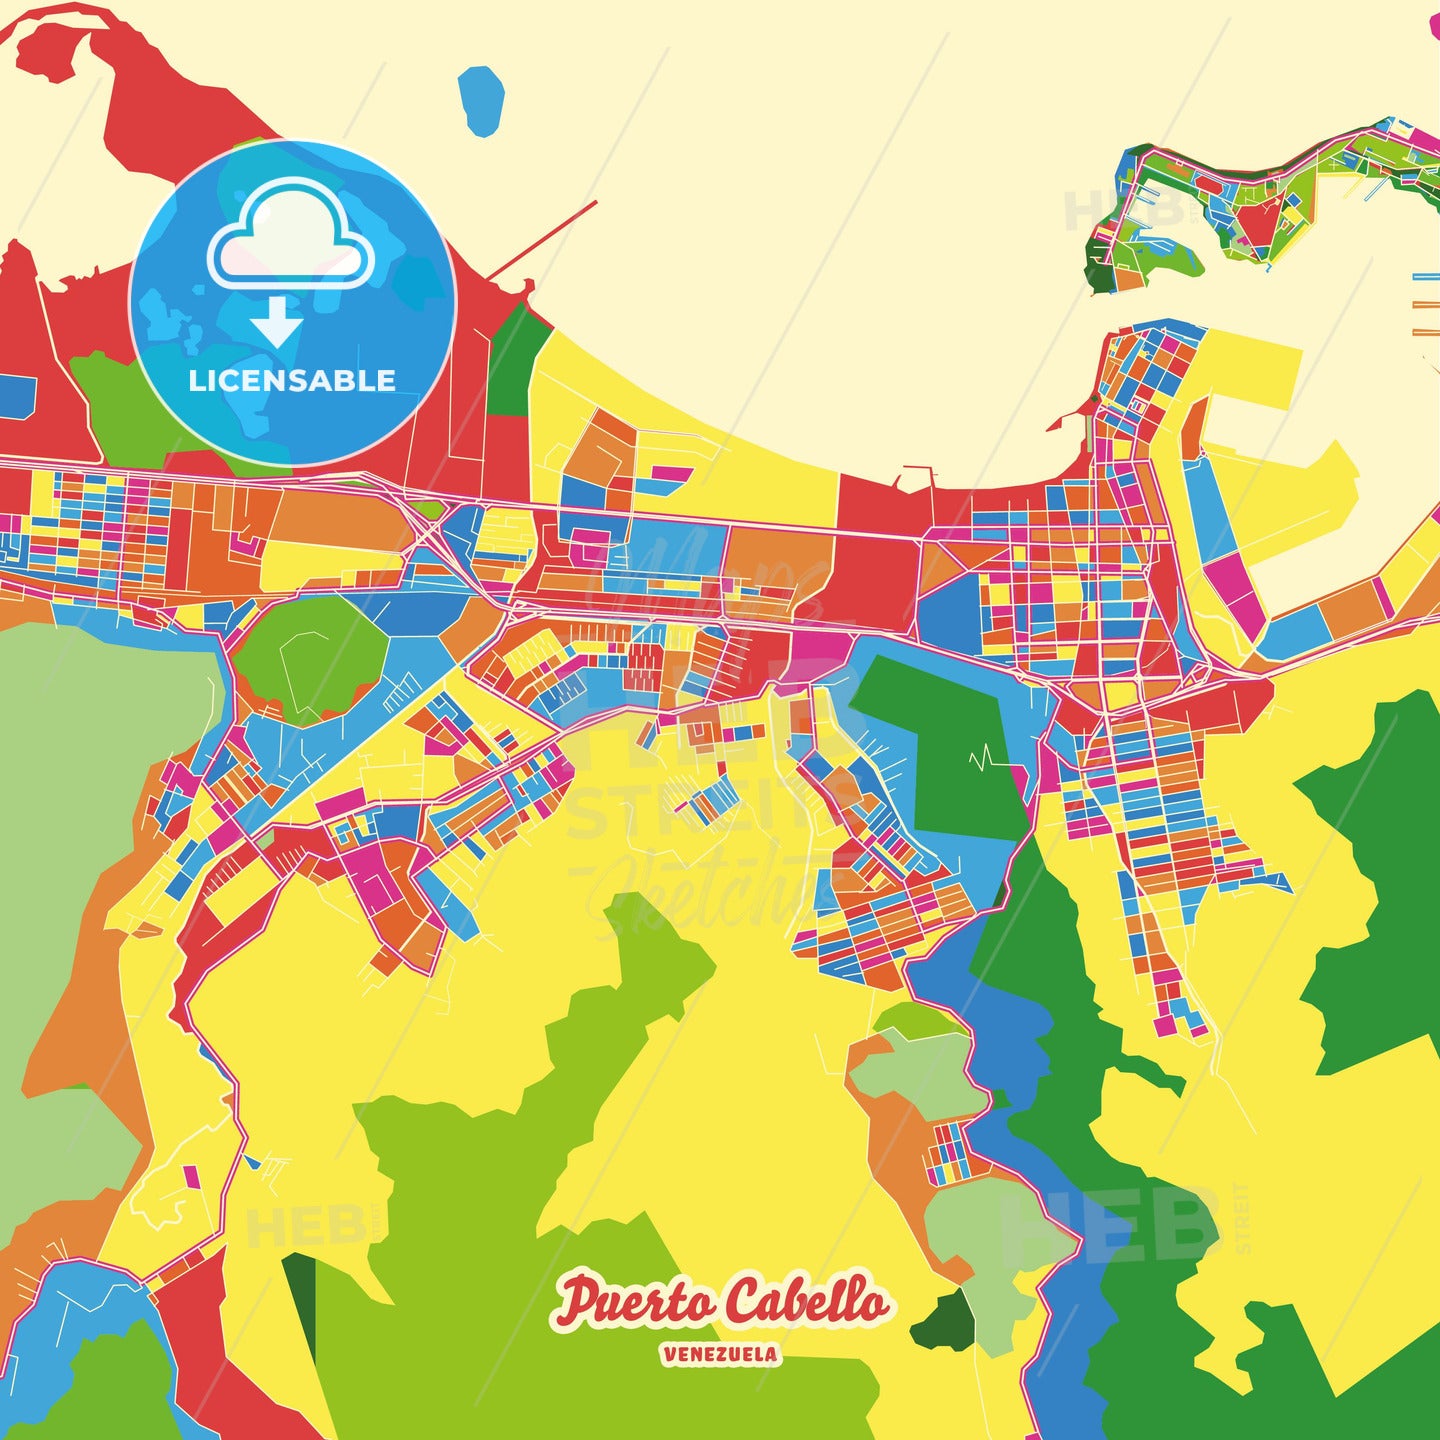 Puerto Cabello, Venezuela Crazy Colorful Street Map Poster Template - HEBSTREITS Sketches